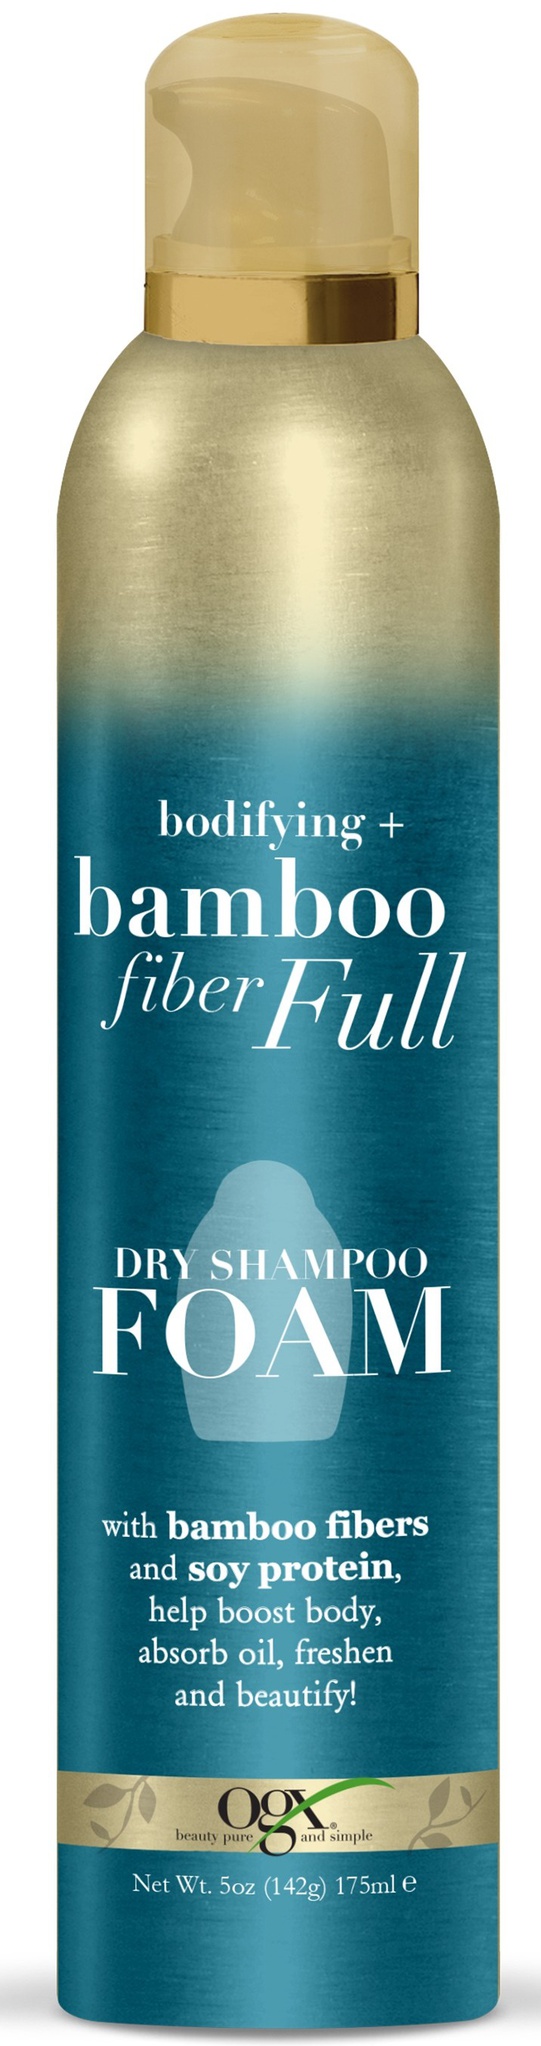 OGX Bodifying + Bamboo Fiber Full Dry Shampoo Foam